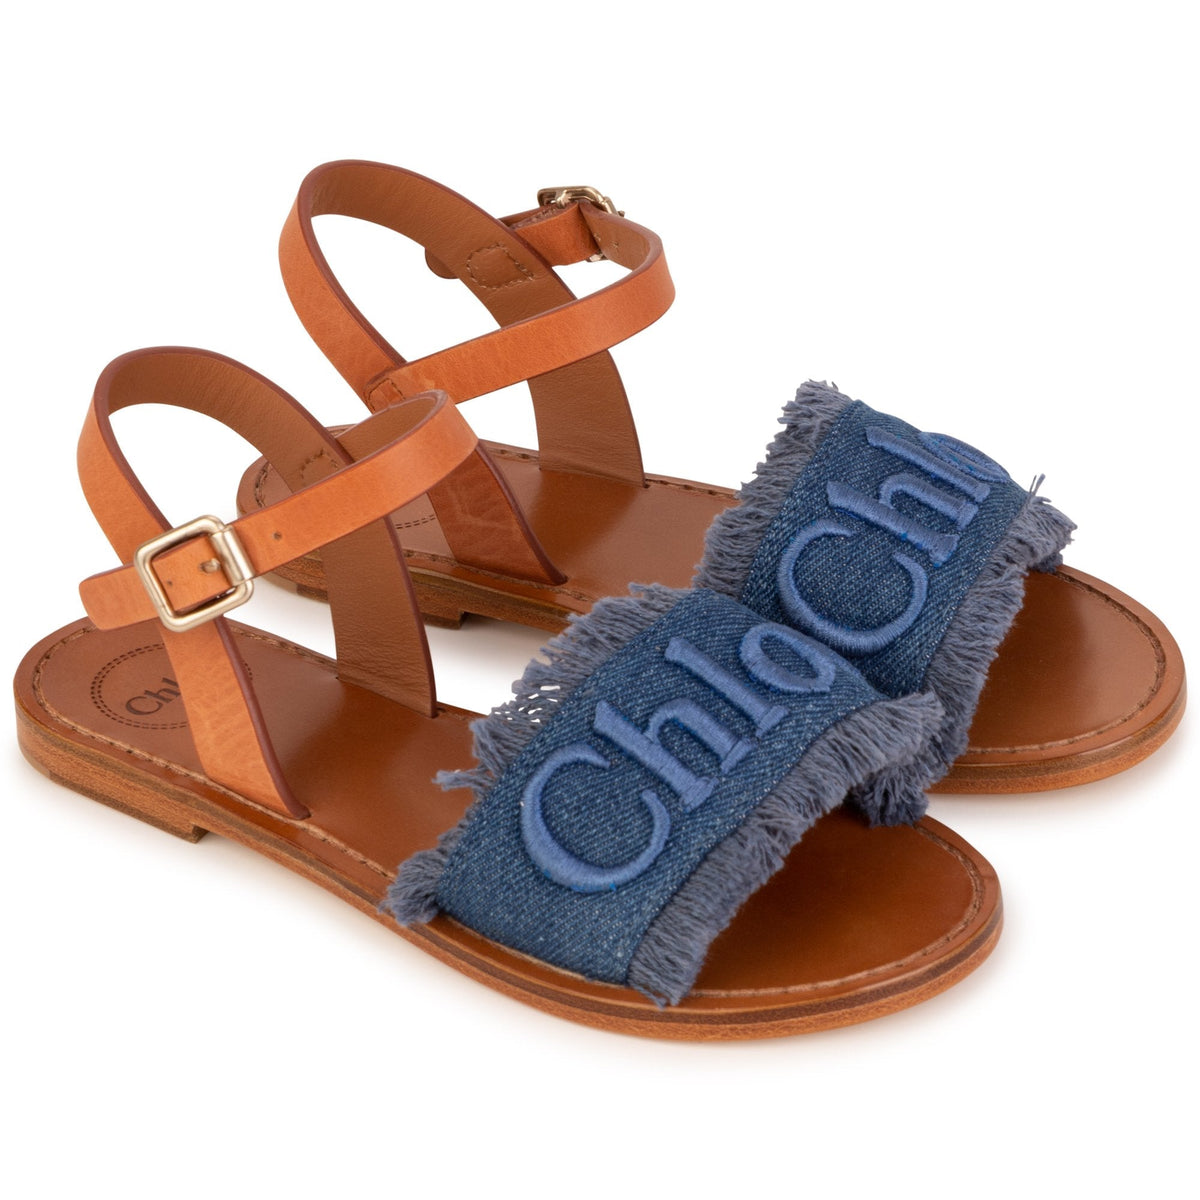 Chloe Girls Blue Strap Sandals